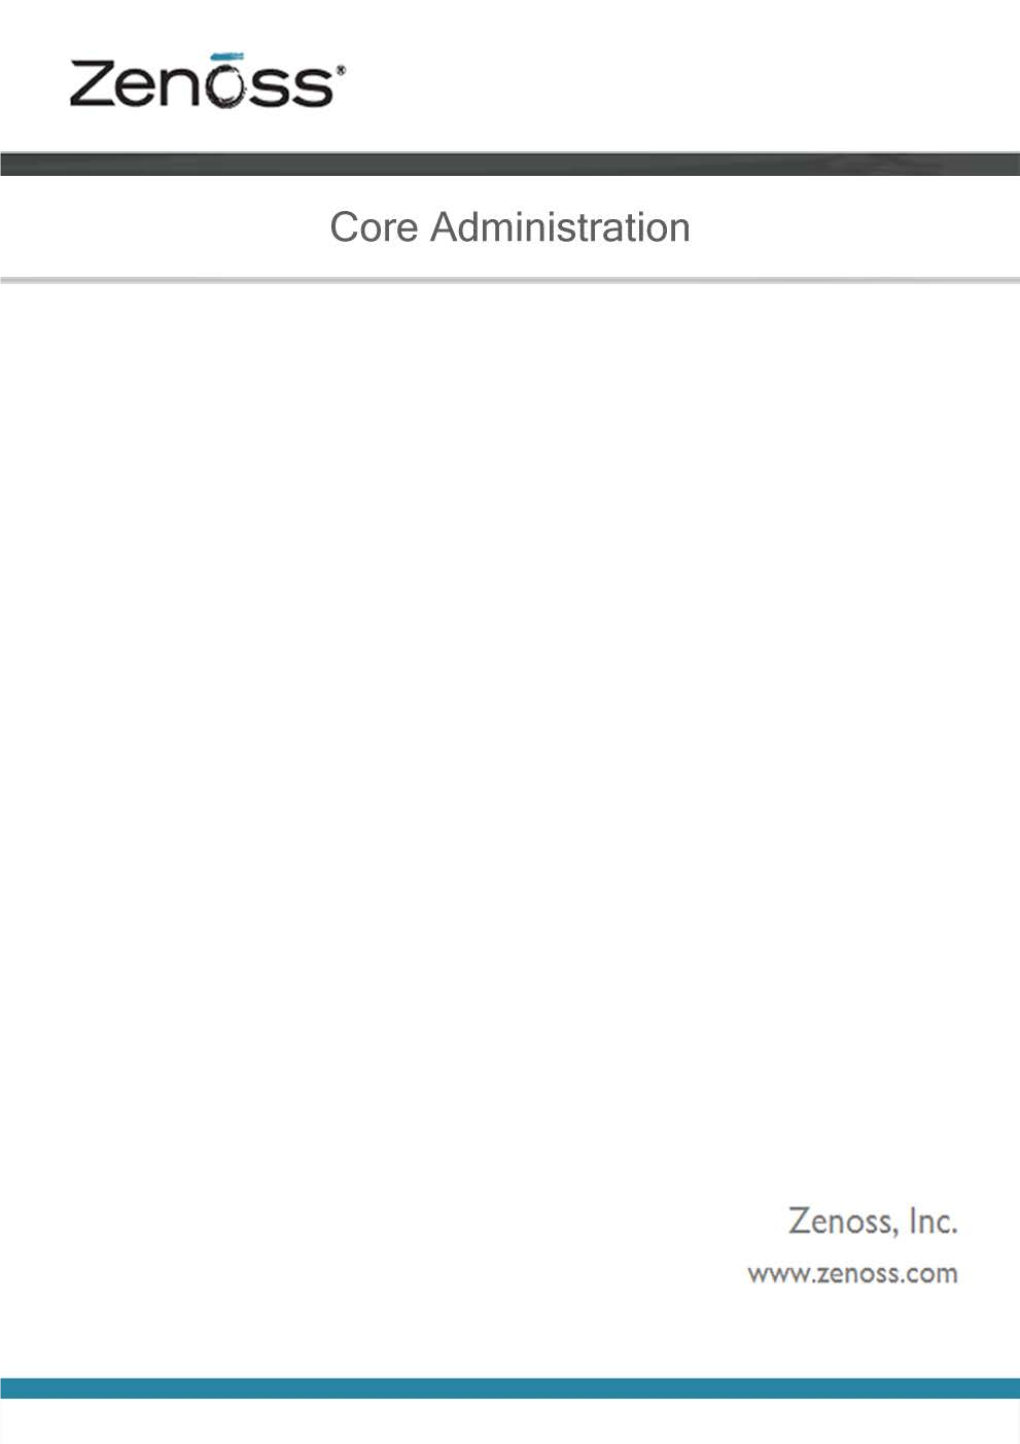 Zenoss Core Administration Copyright © 2012 Zenoss, Inc., 275 West St